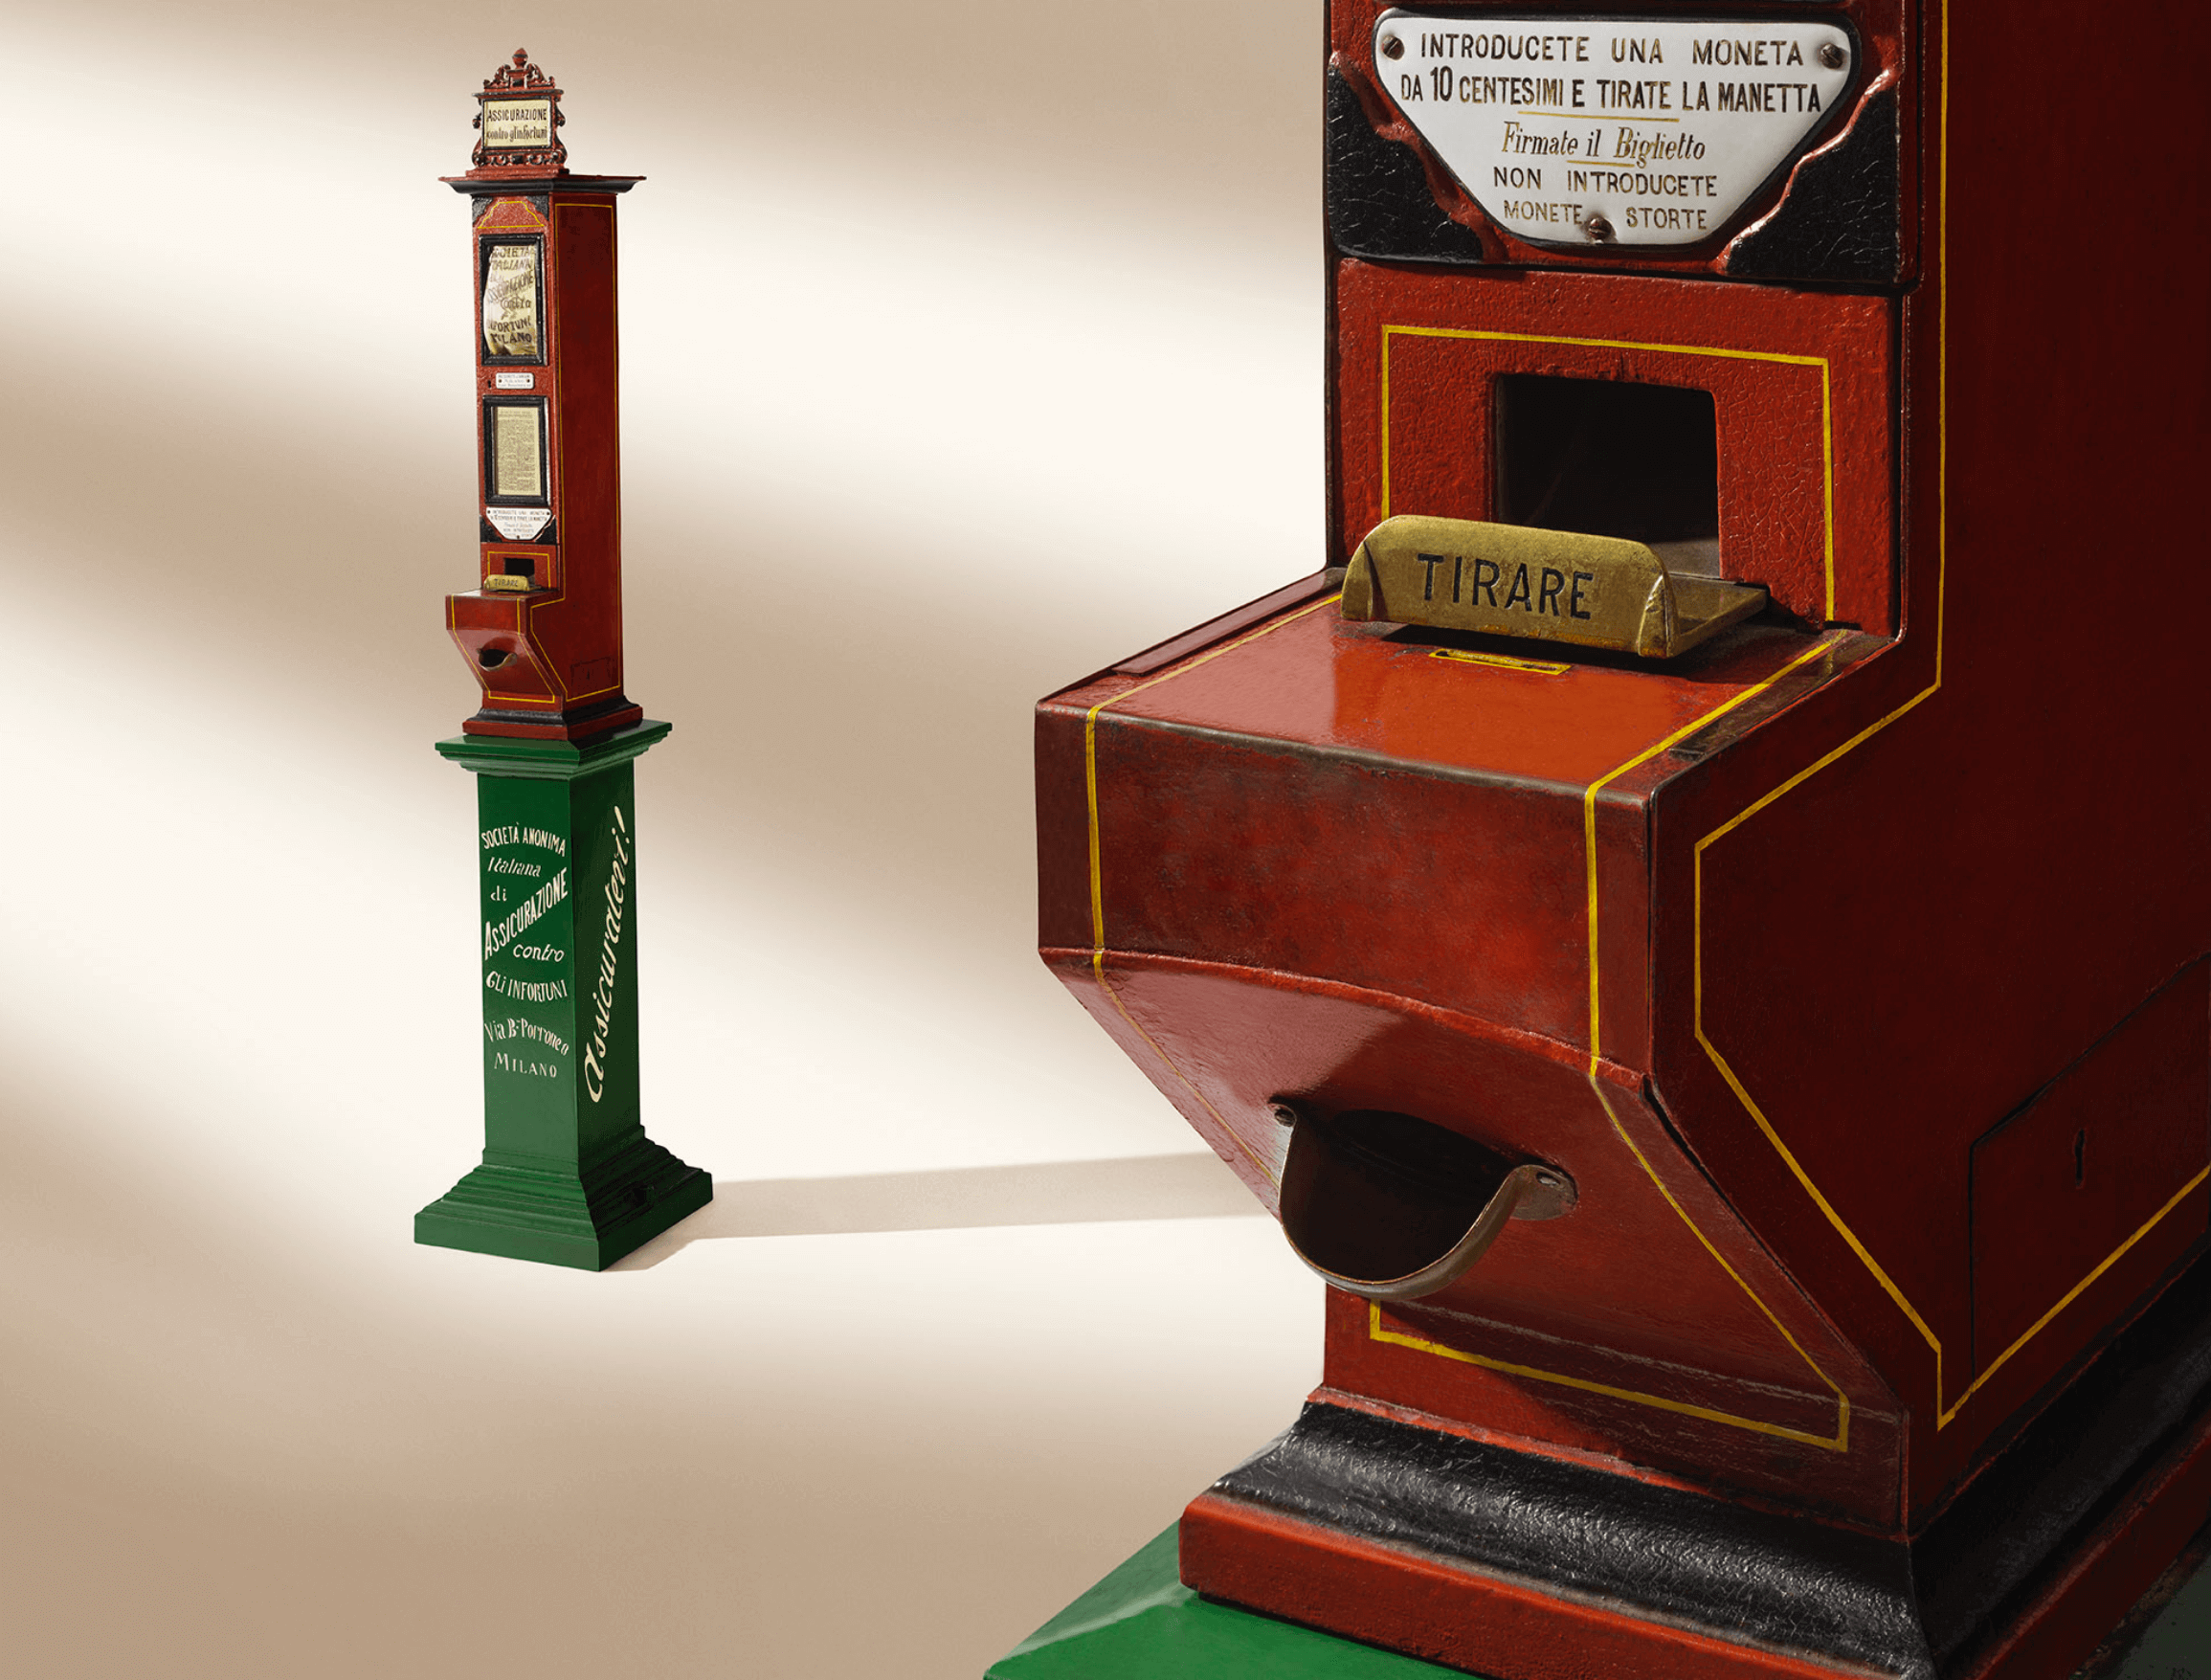 Pioneer of on-demand Insurance: 1898, the Insurance Vending Machine